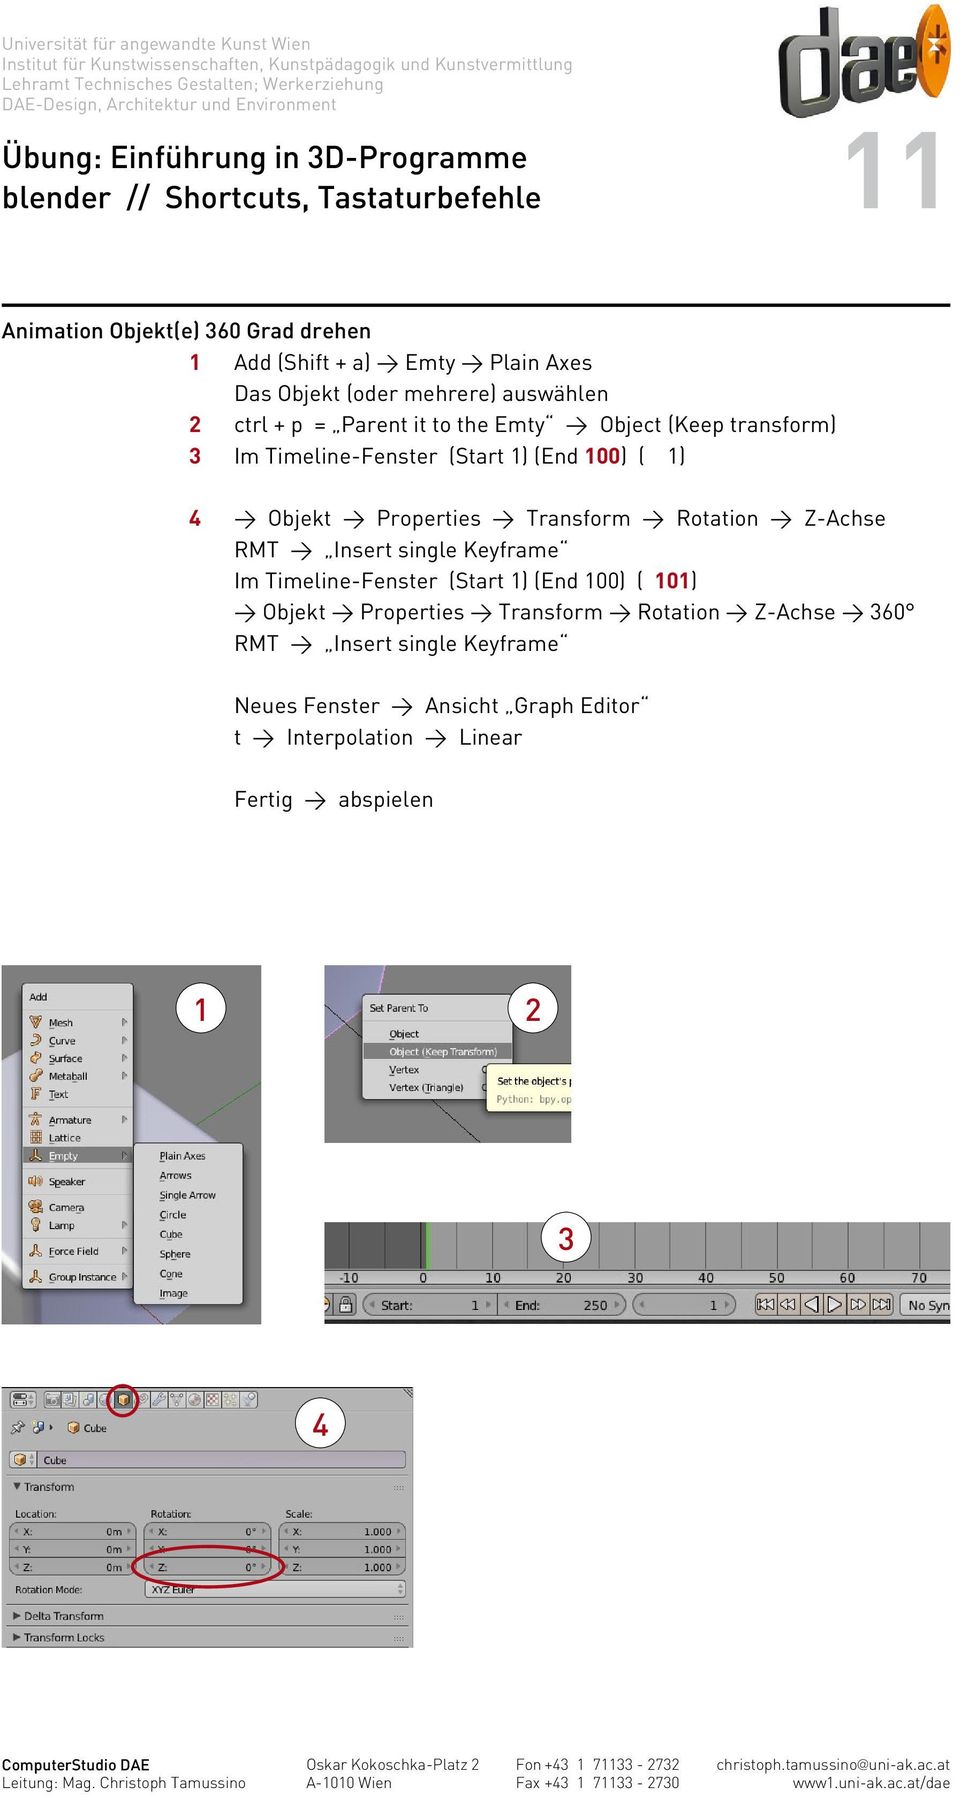 Rotation Z-Achse RMT Insert single Keyframe Im Timeline-Fenster (Start 1) (End 100) ( 101) Objekt Properties Transform